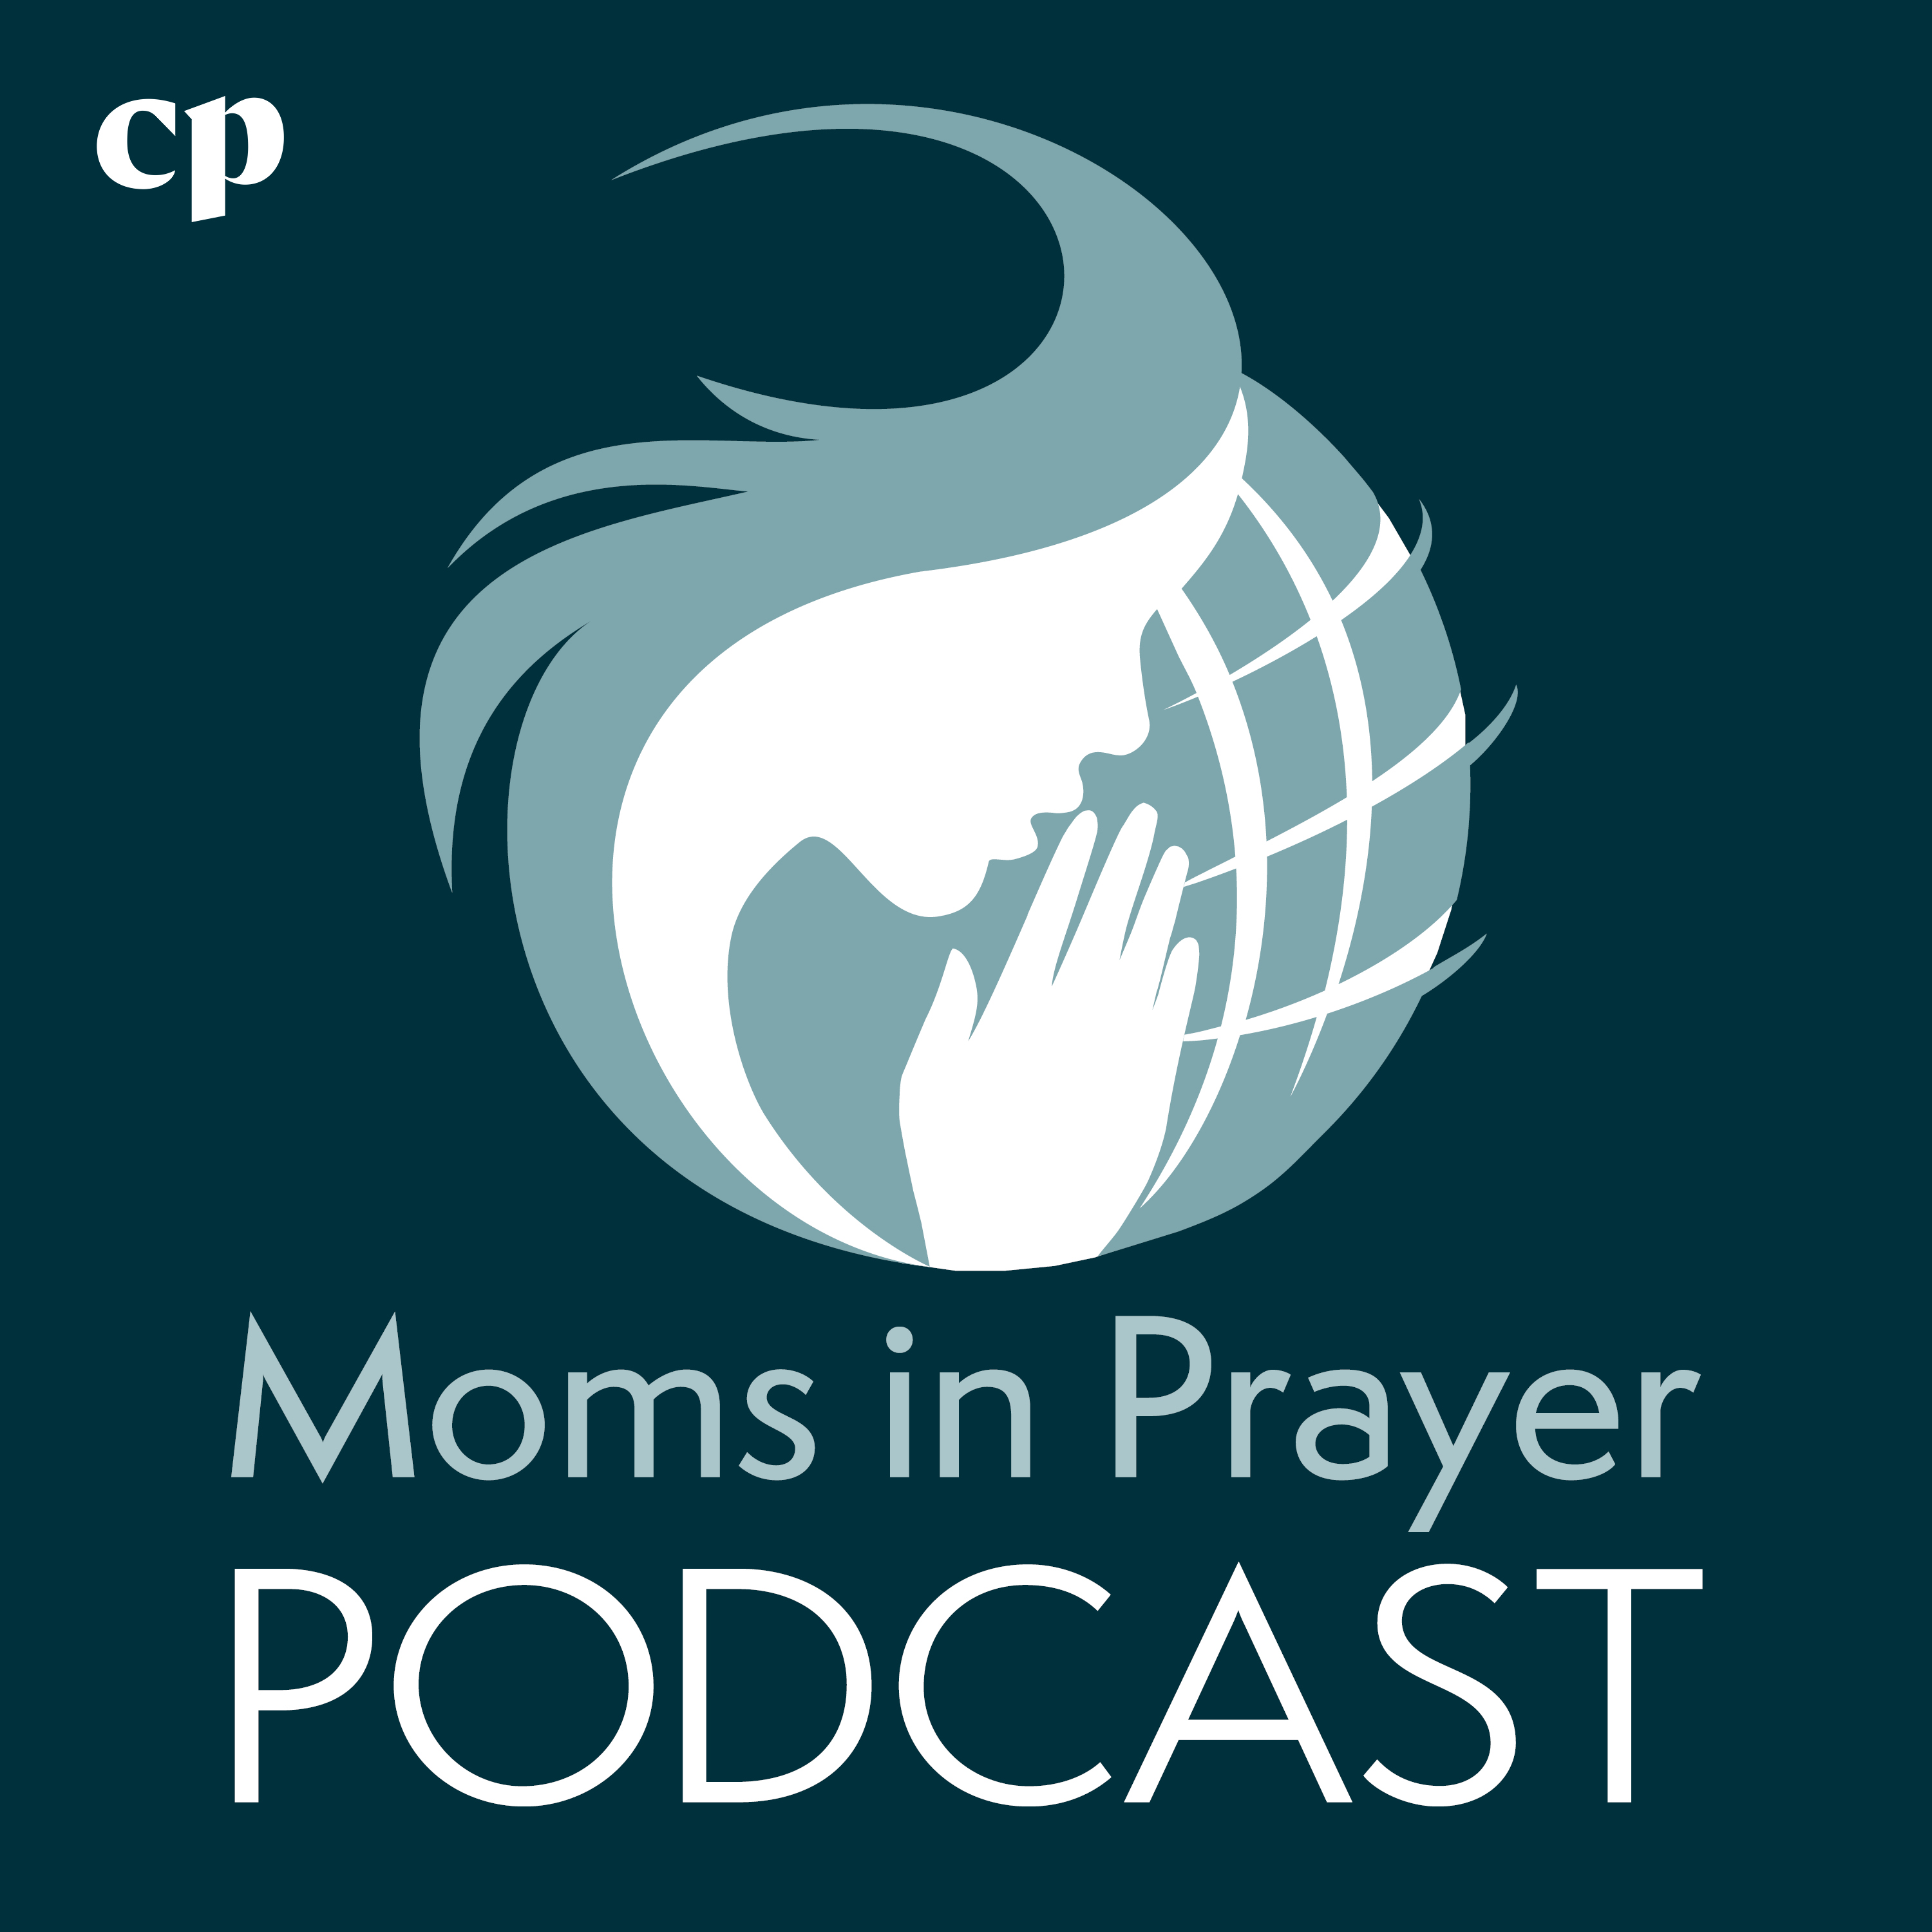 Episode 182 - Travel the Whole World Through Prayer with Cathi Armitage